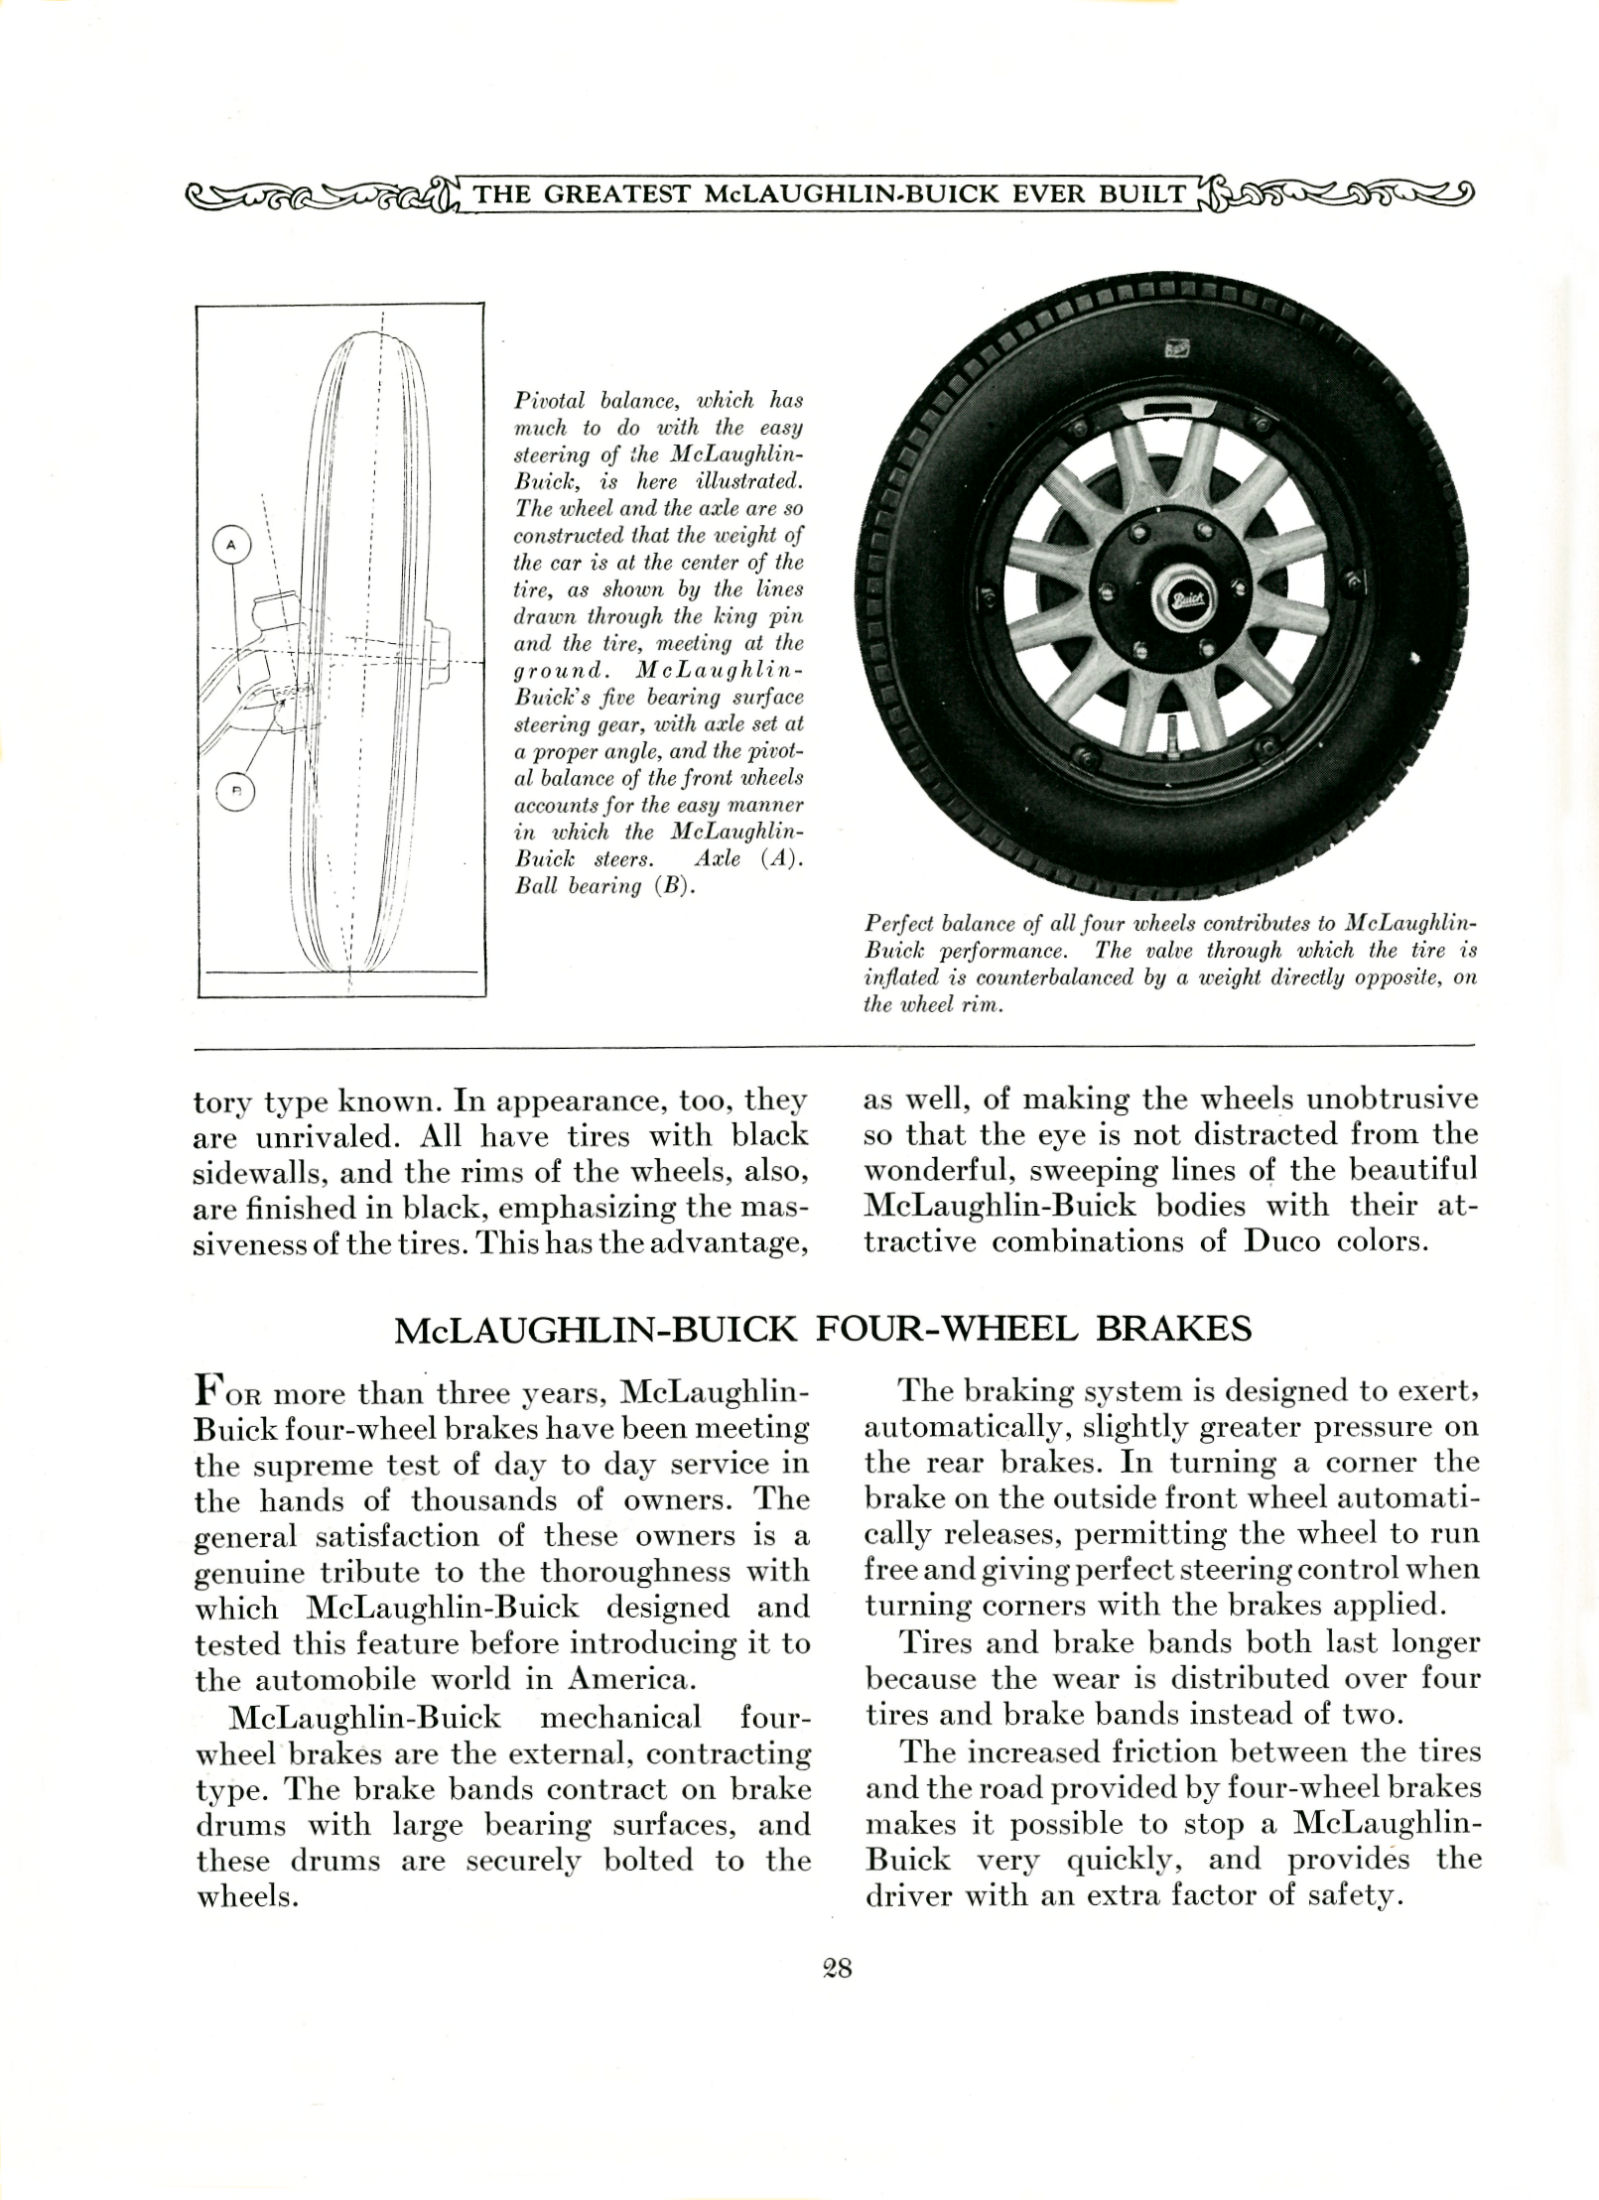 1930 McLaughlin Buick Booklet-28